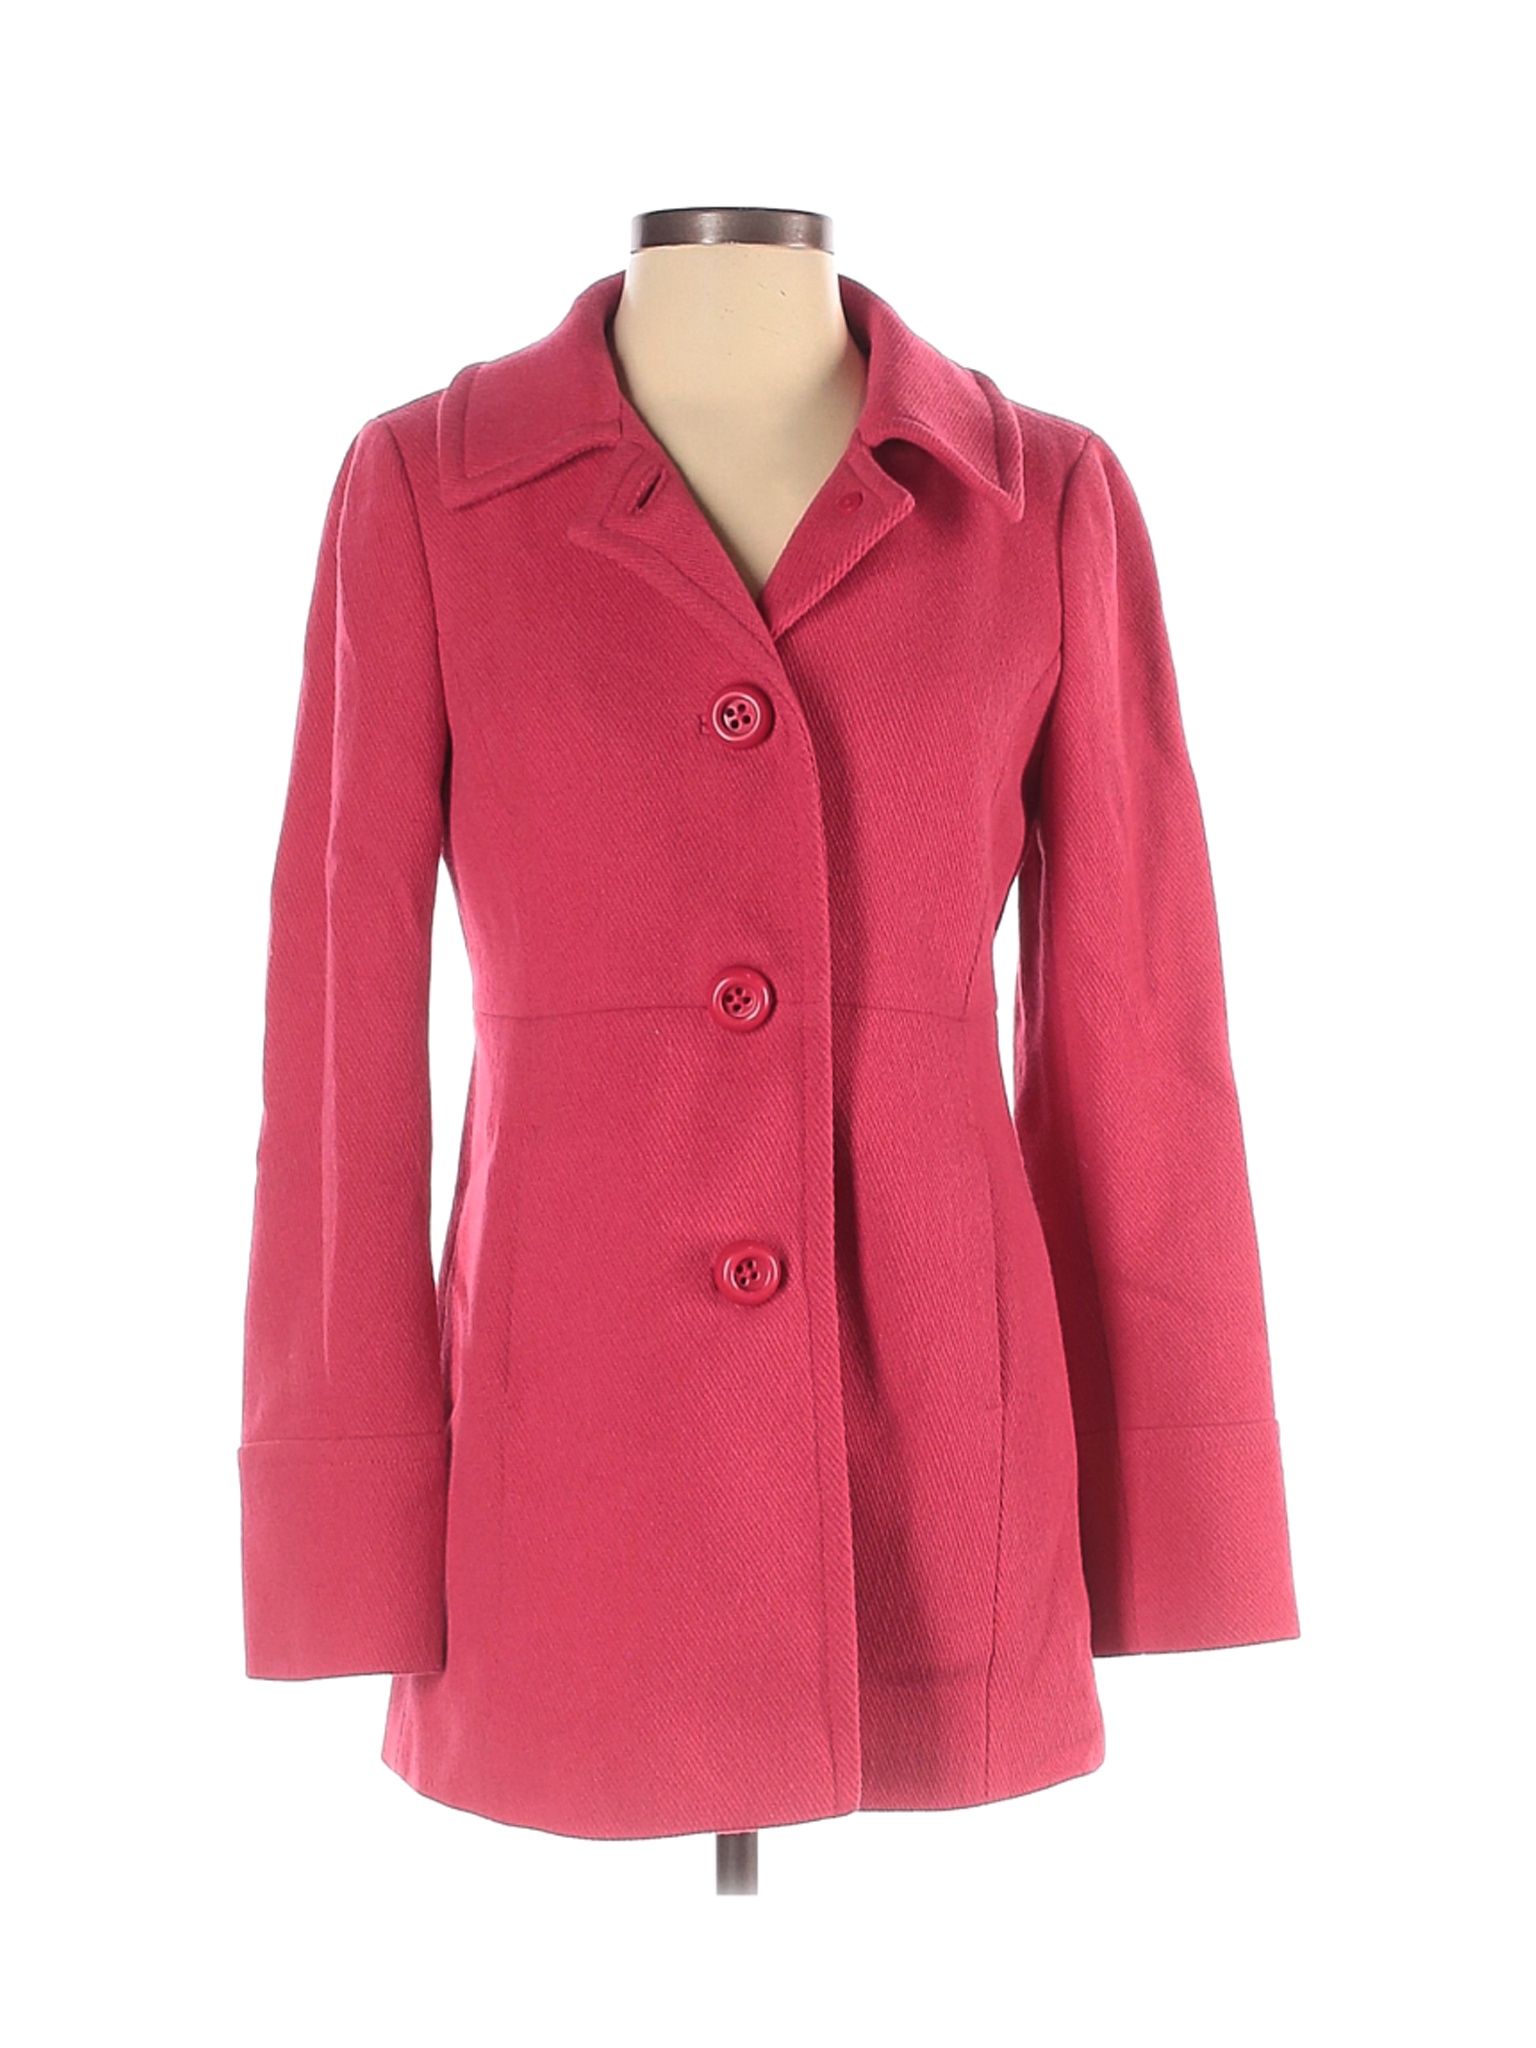 J.Crew Factory Store Women Pink Wool Coat 4 | eBay